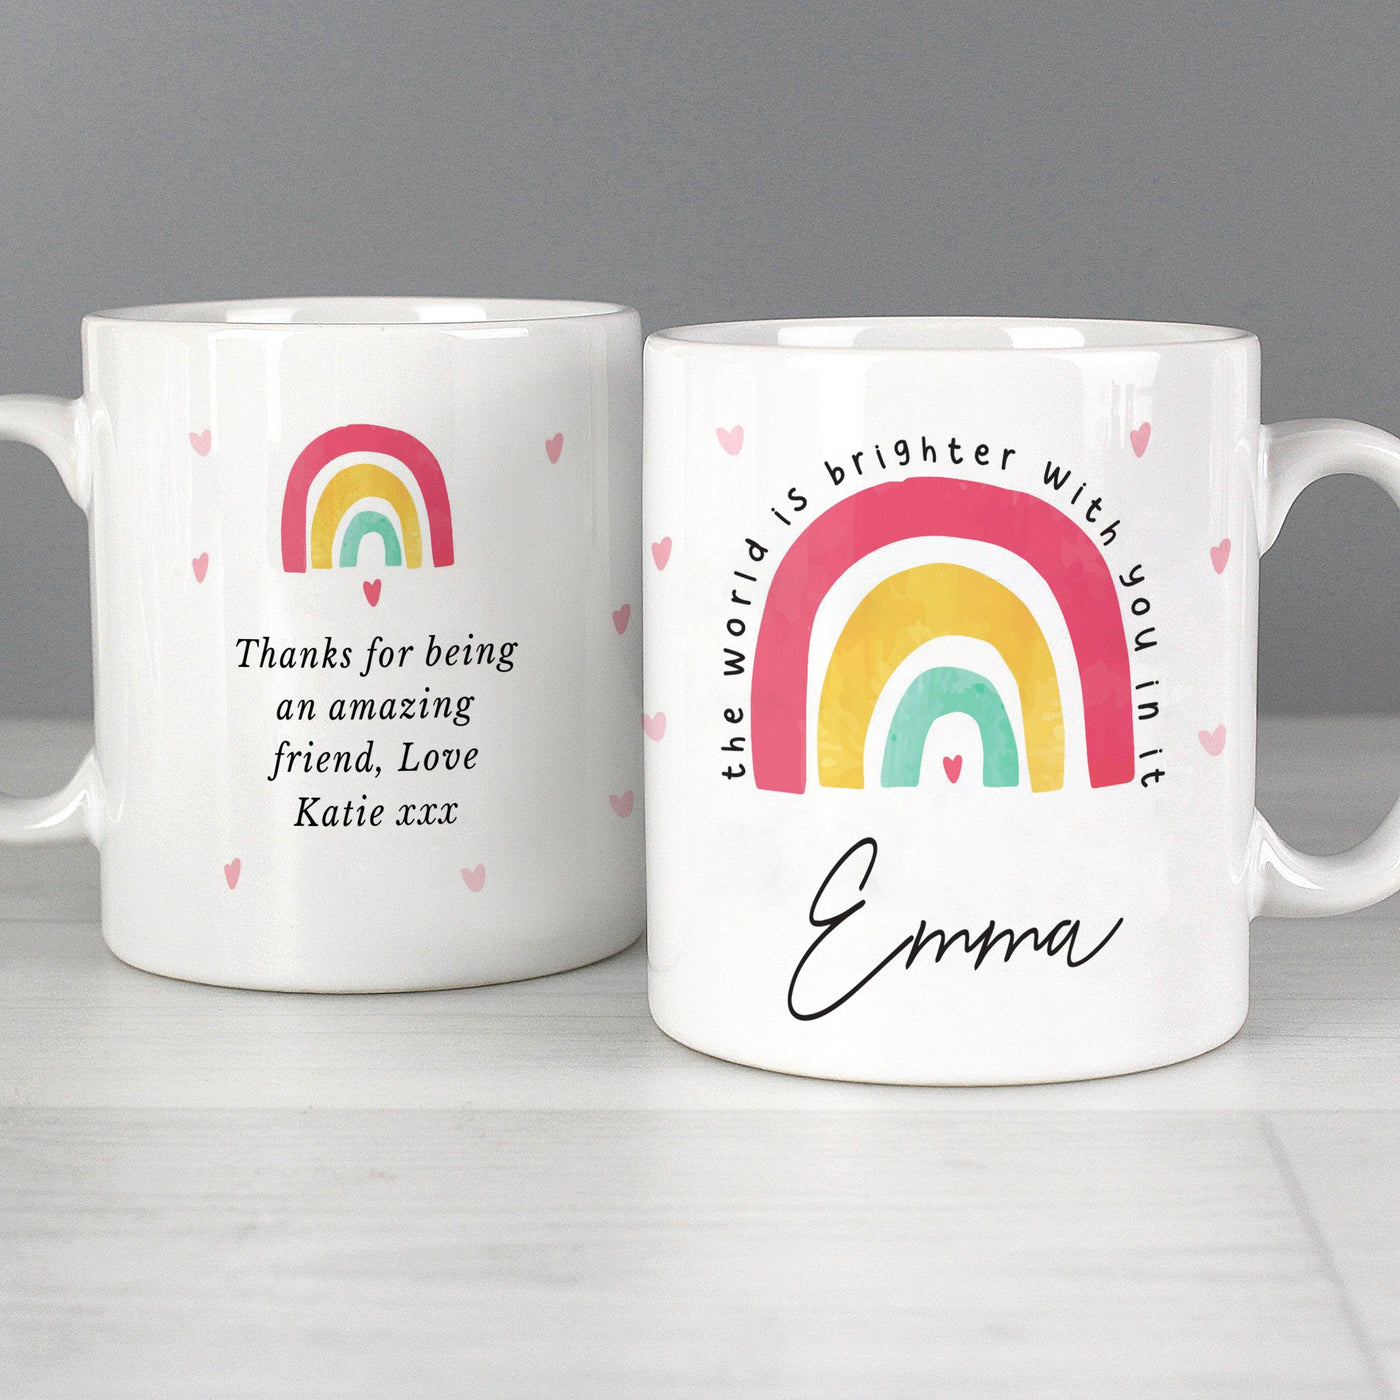 Personalised You Make The World Brighter Ceramic Mug - Shop Personalised Gifts